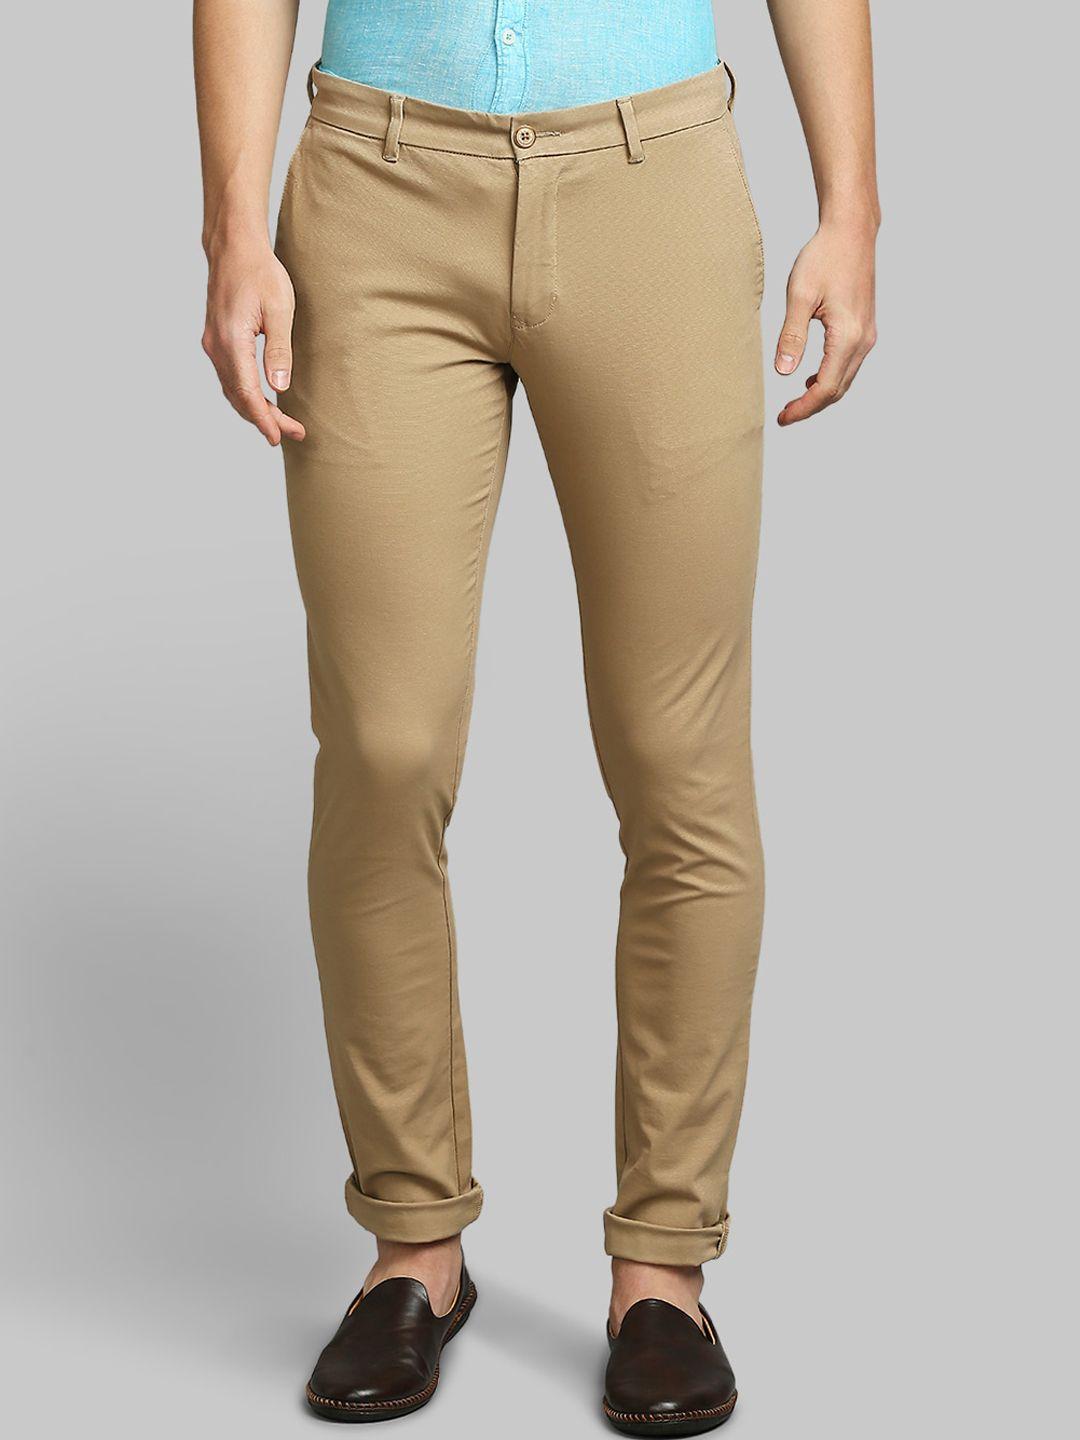 parx-men-brown-trousers